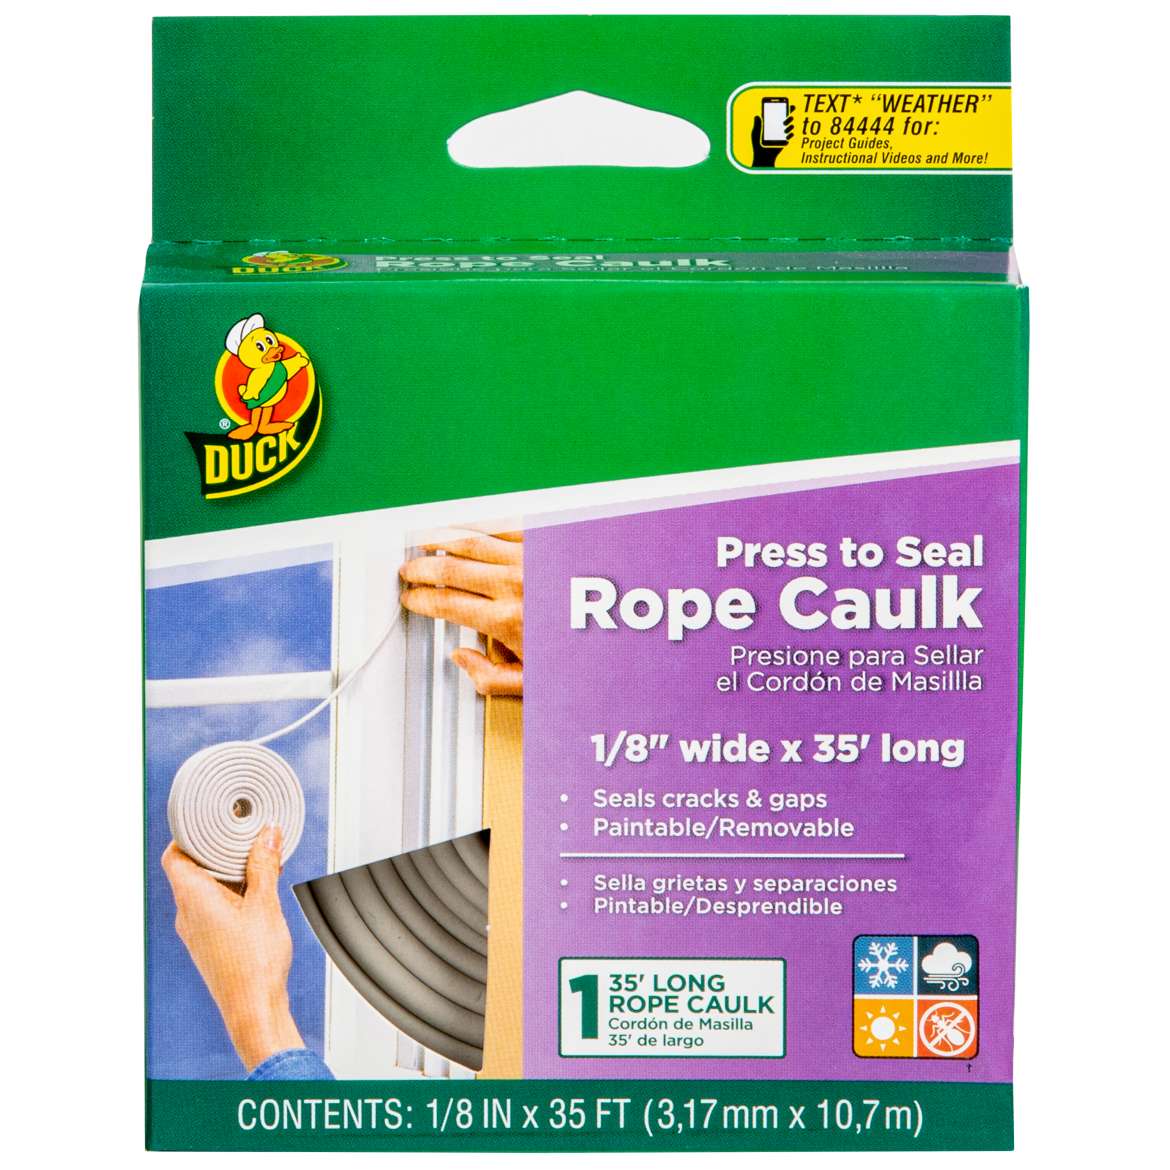 Rope Caulk Image